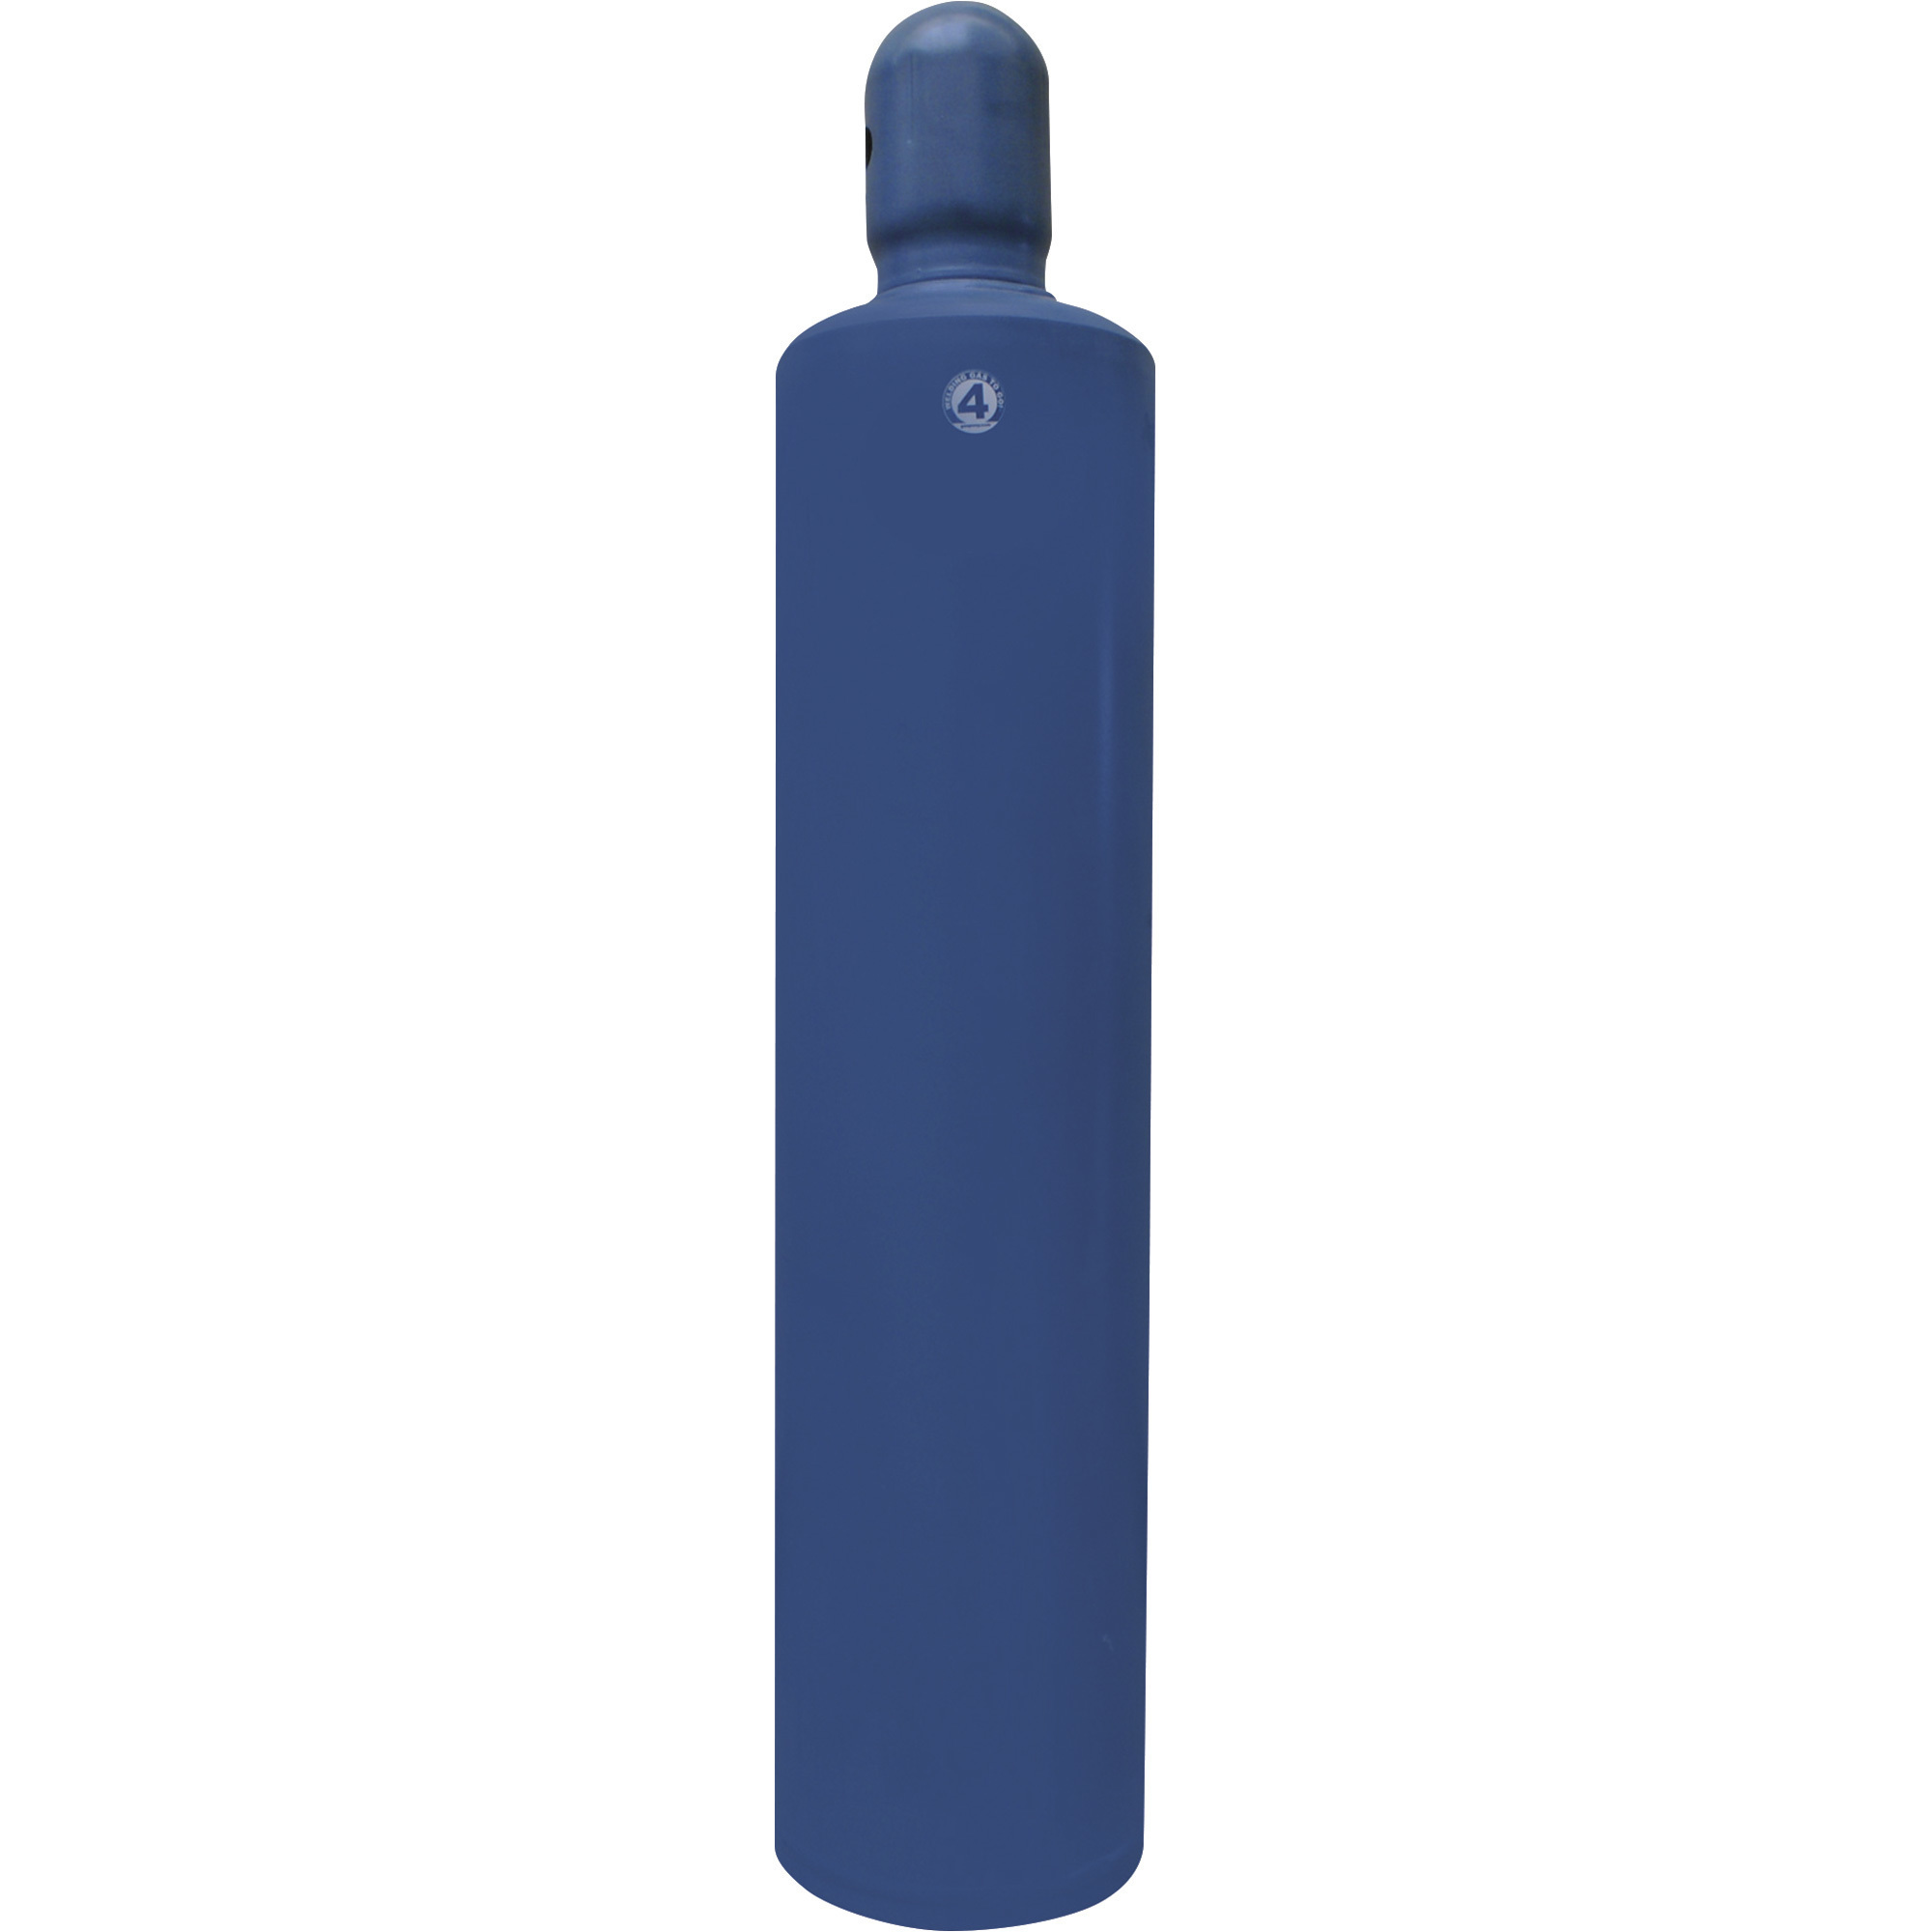 Thoroughbred Acetylene Gas Cylinder â Size #4, 140CF